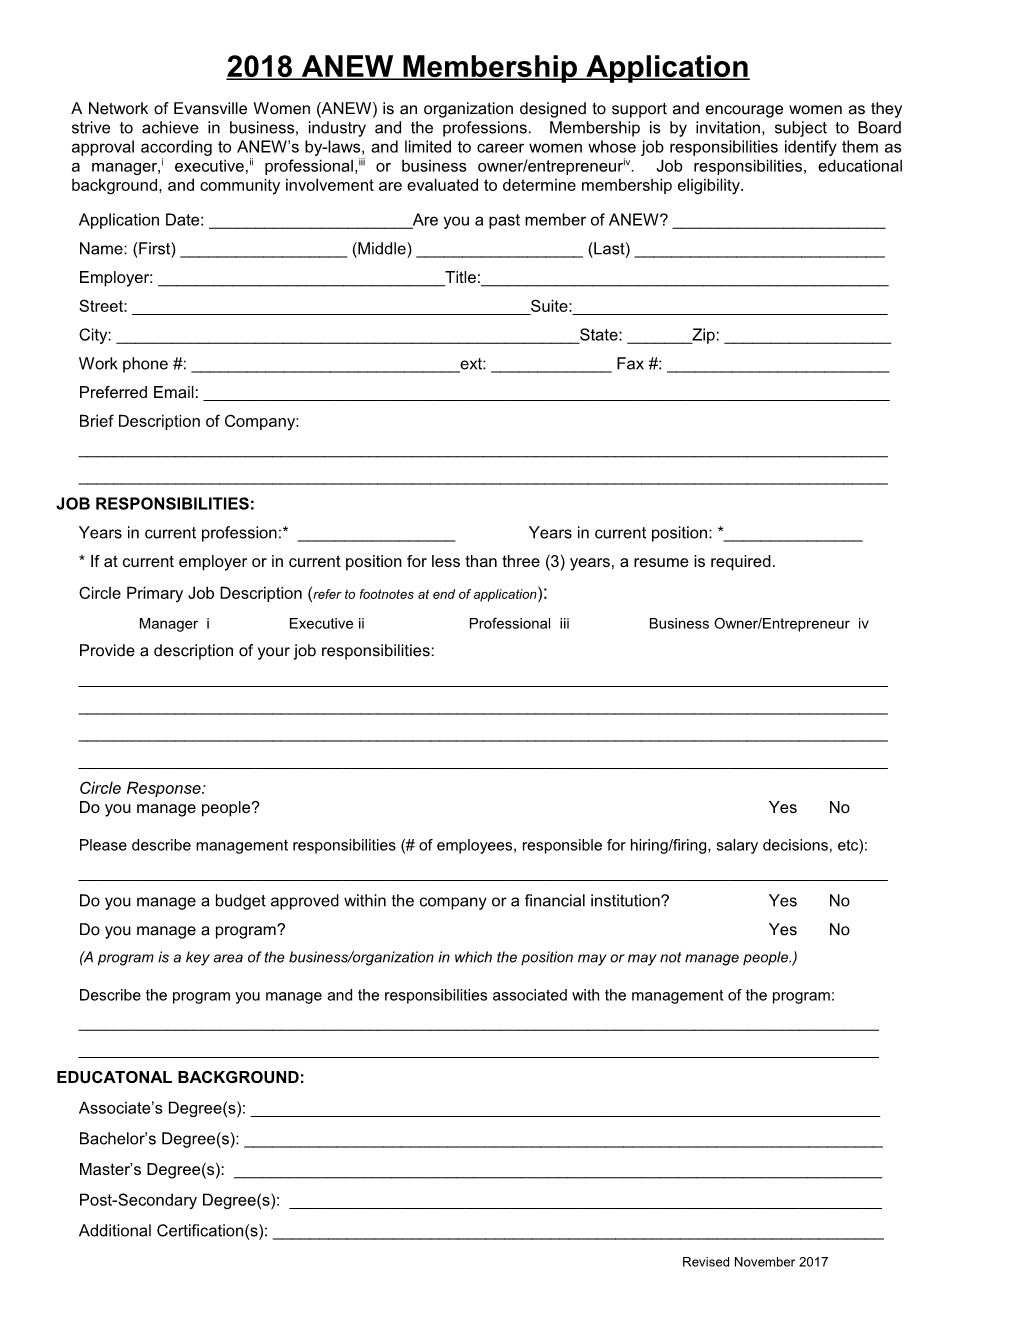 ANEW Membership Application